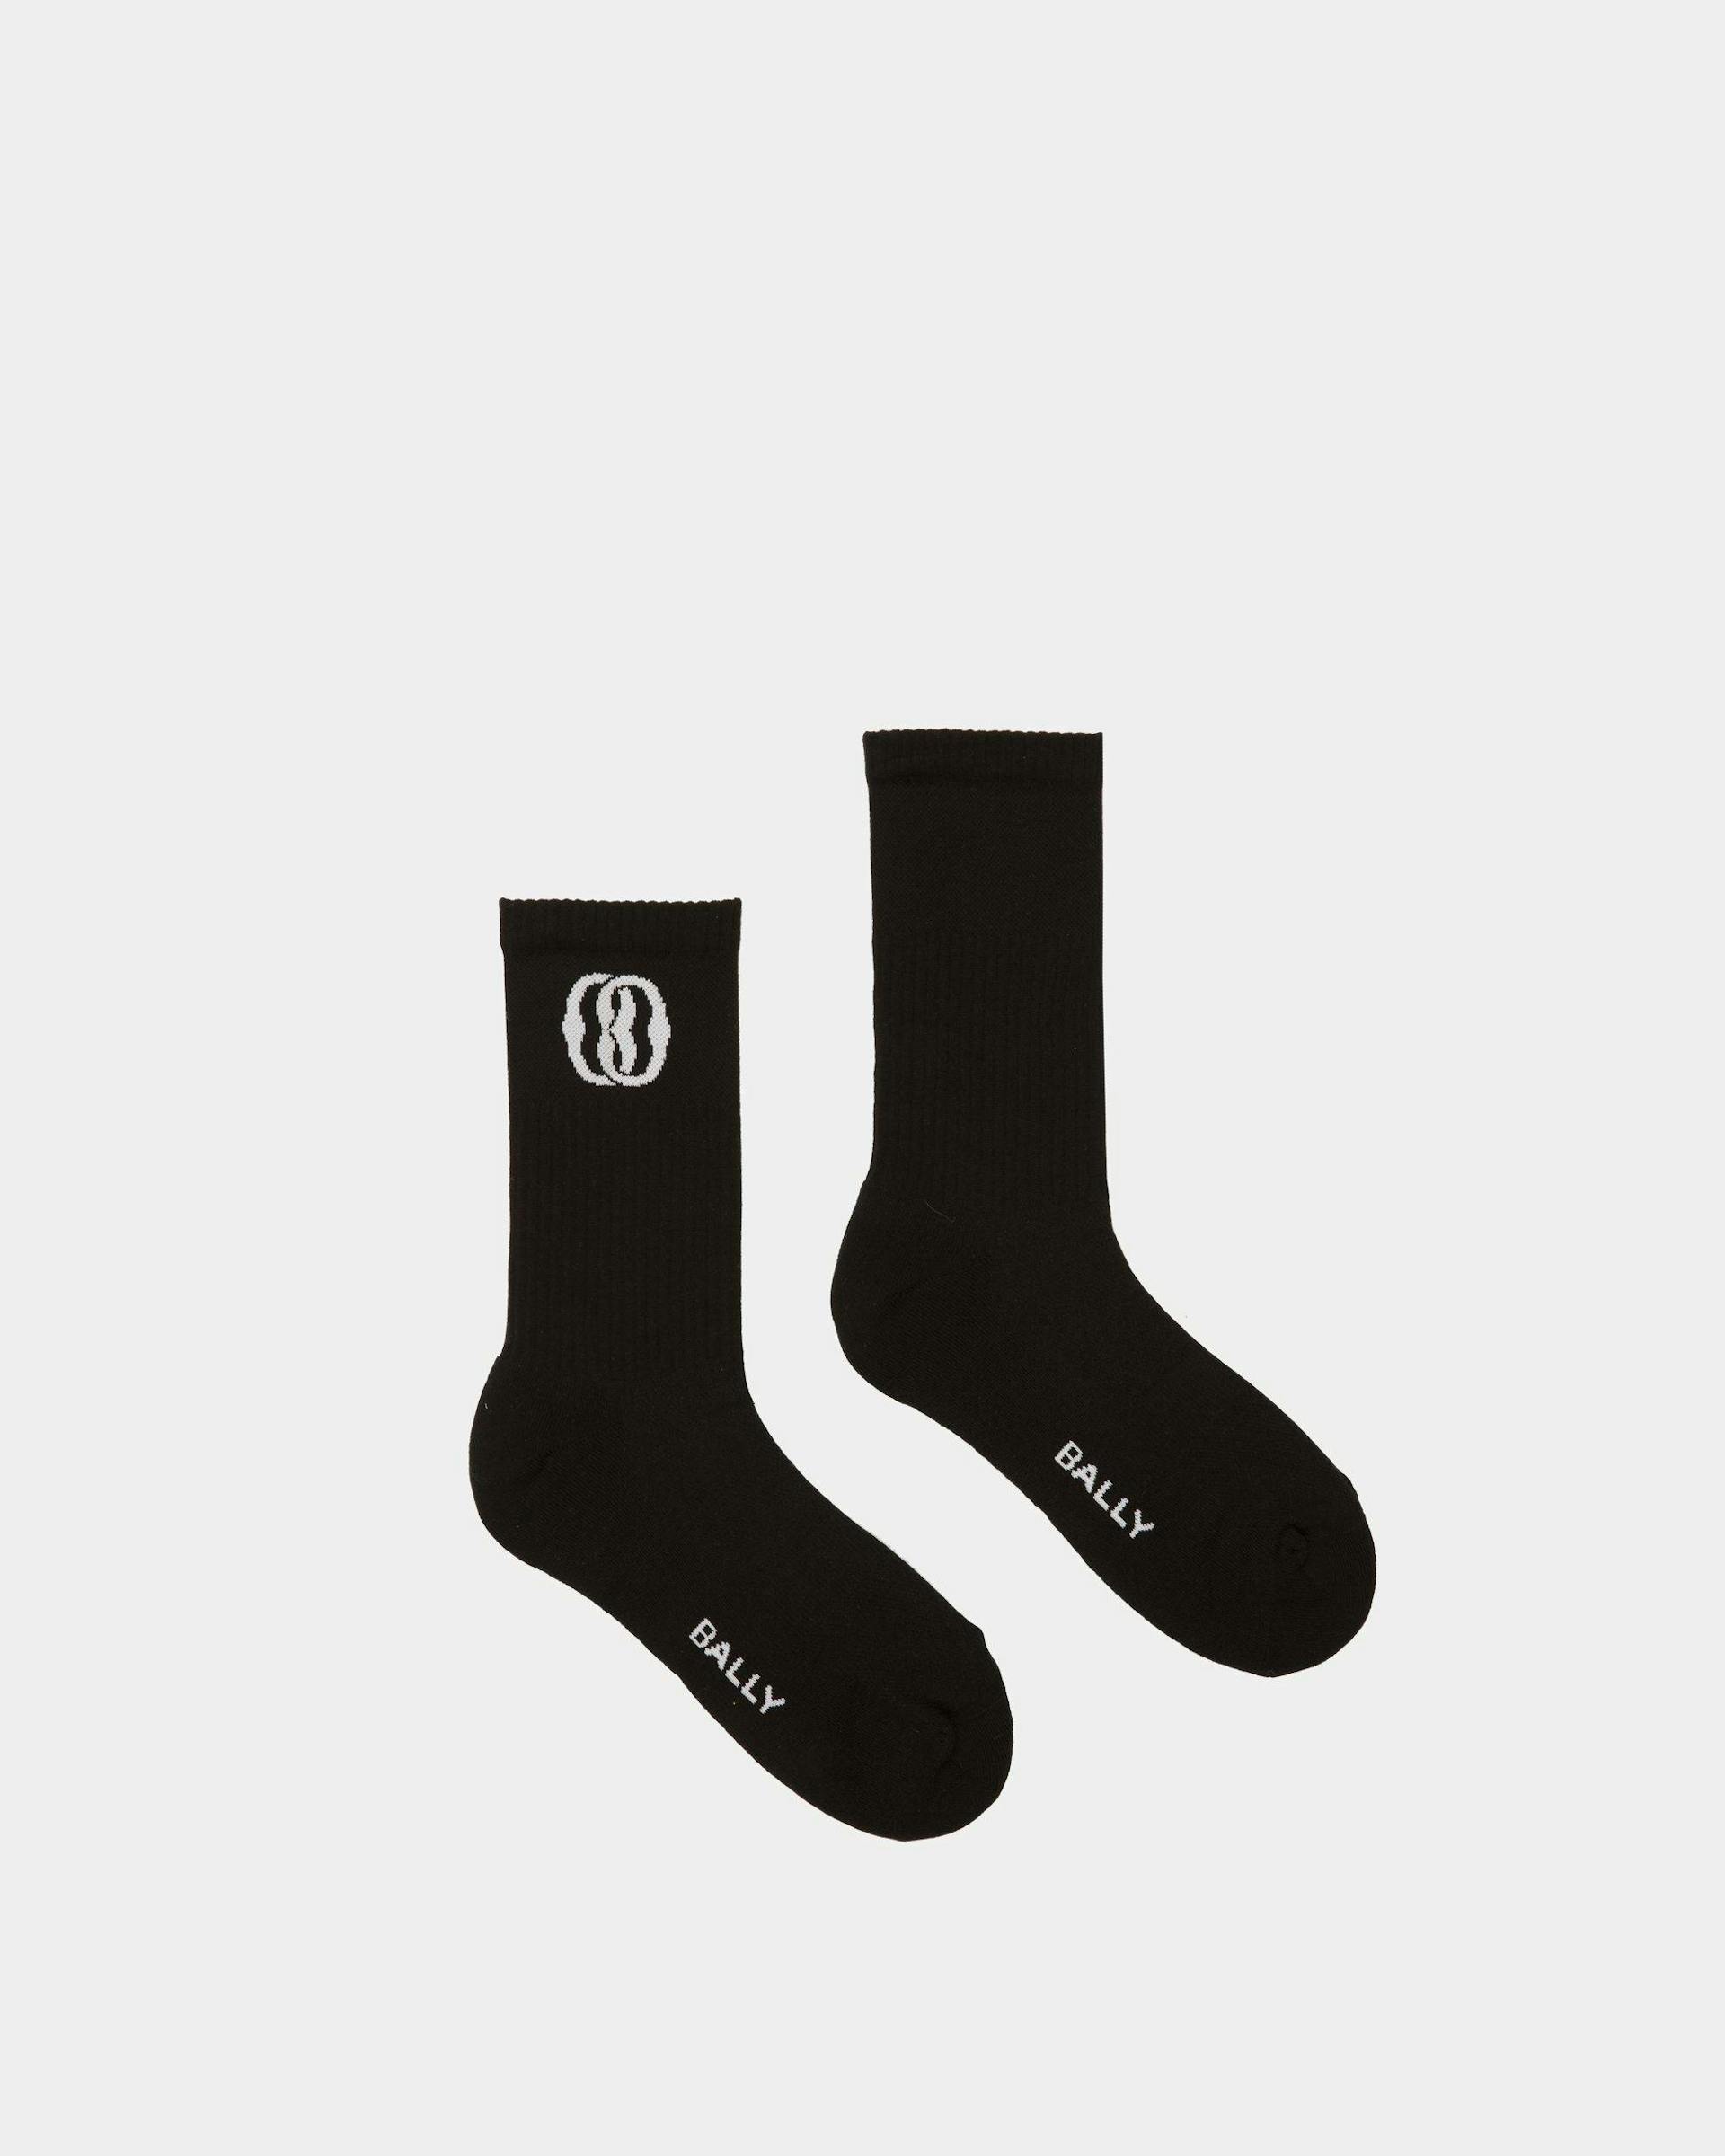 Emblem Socks - Bally